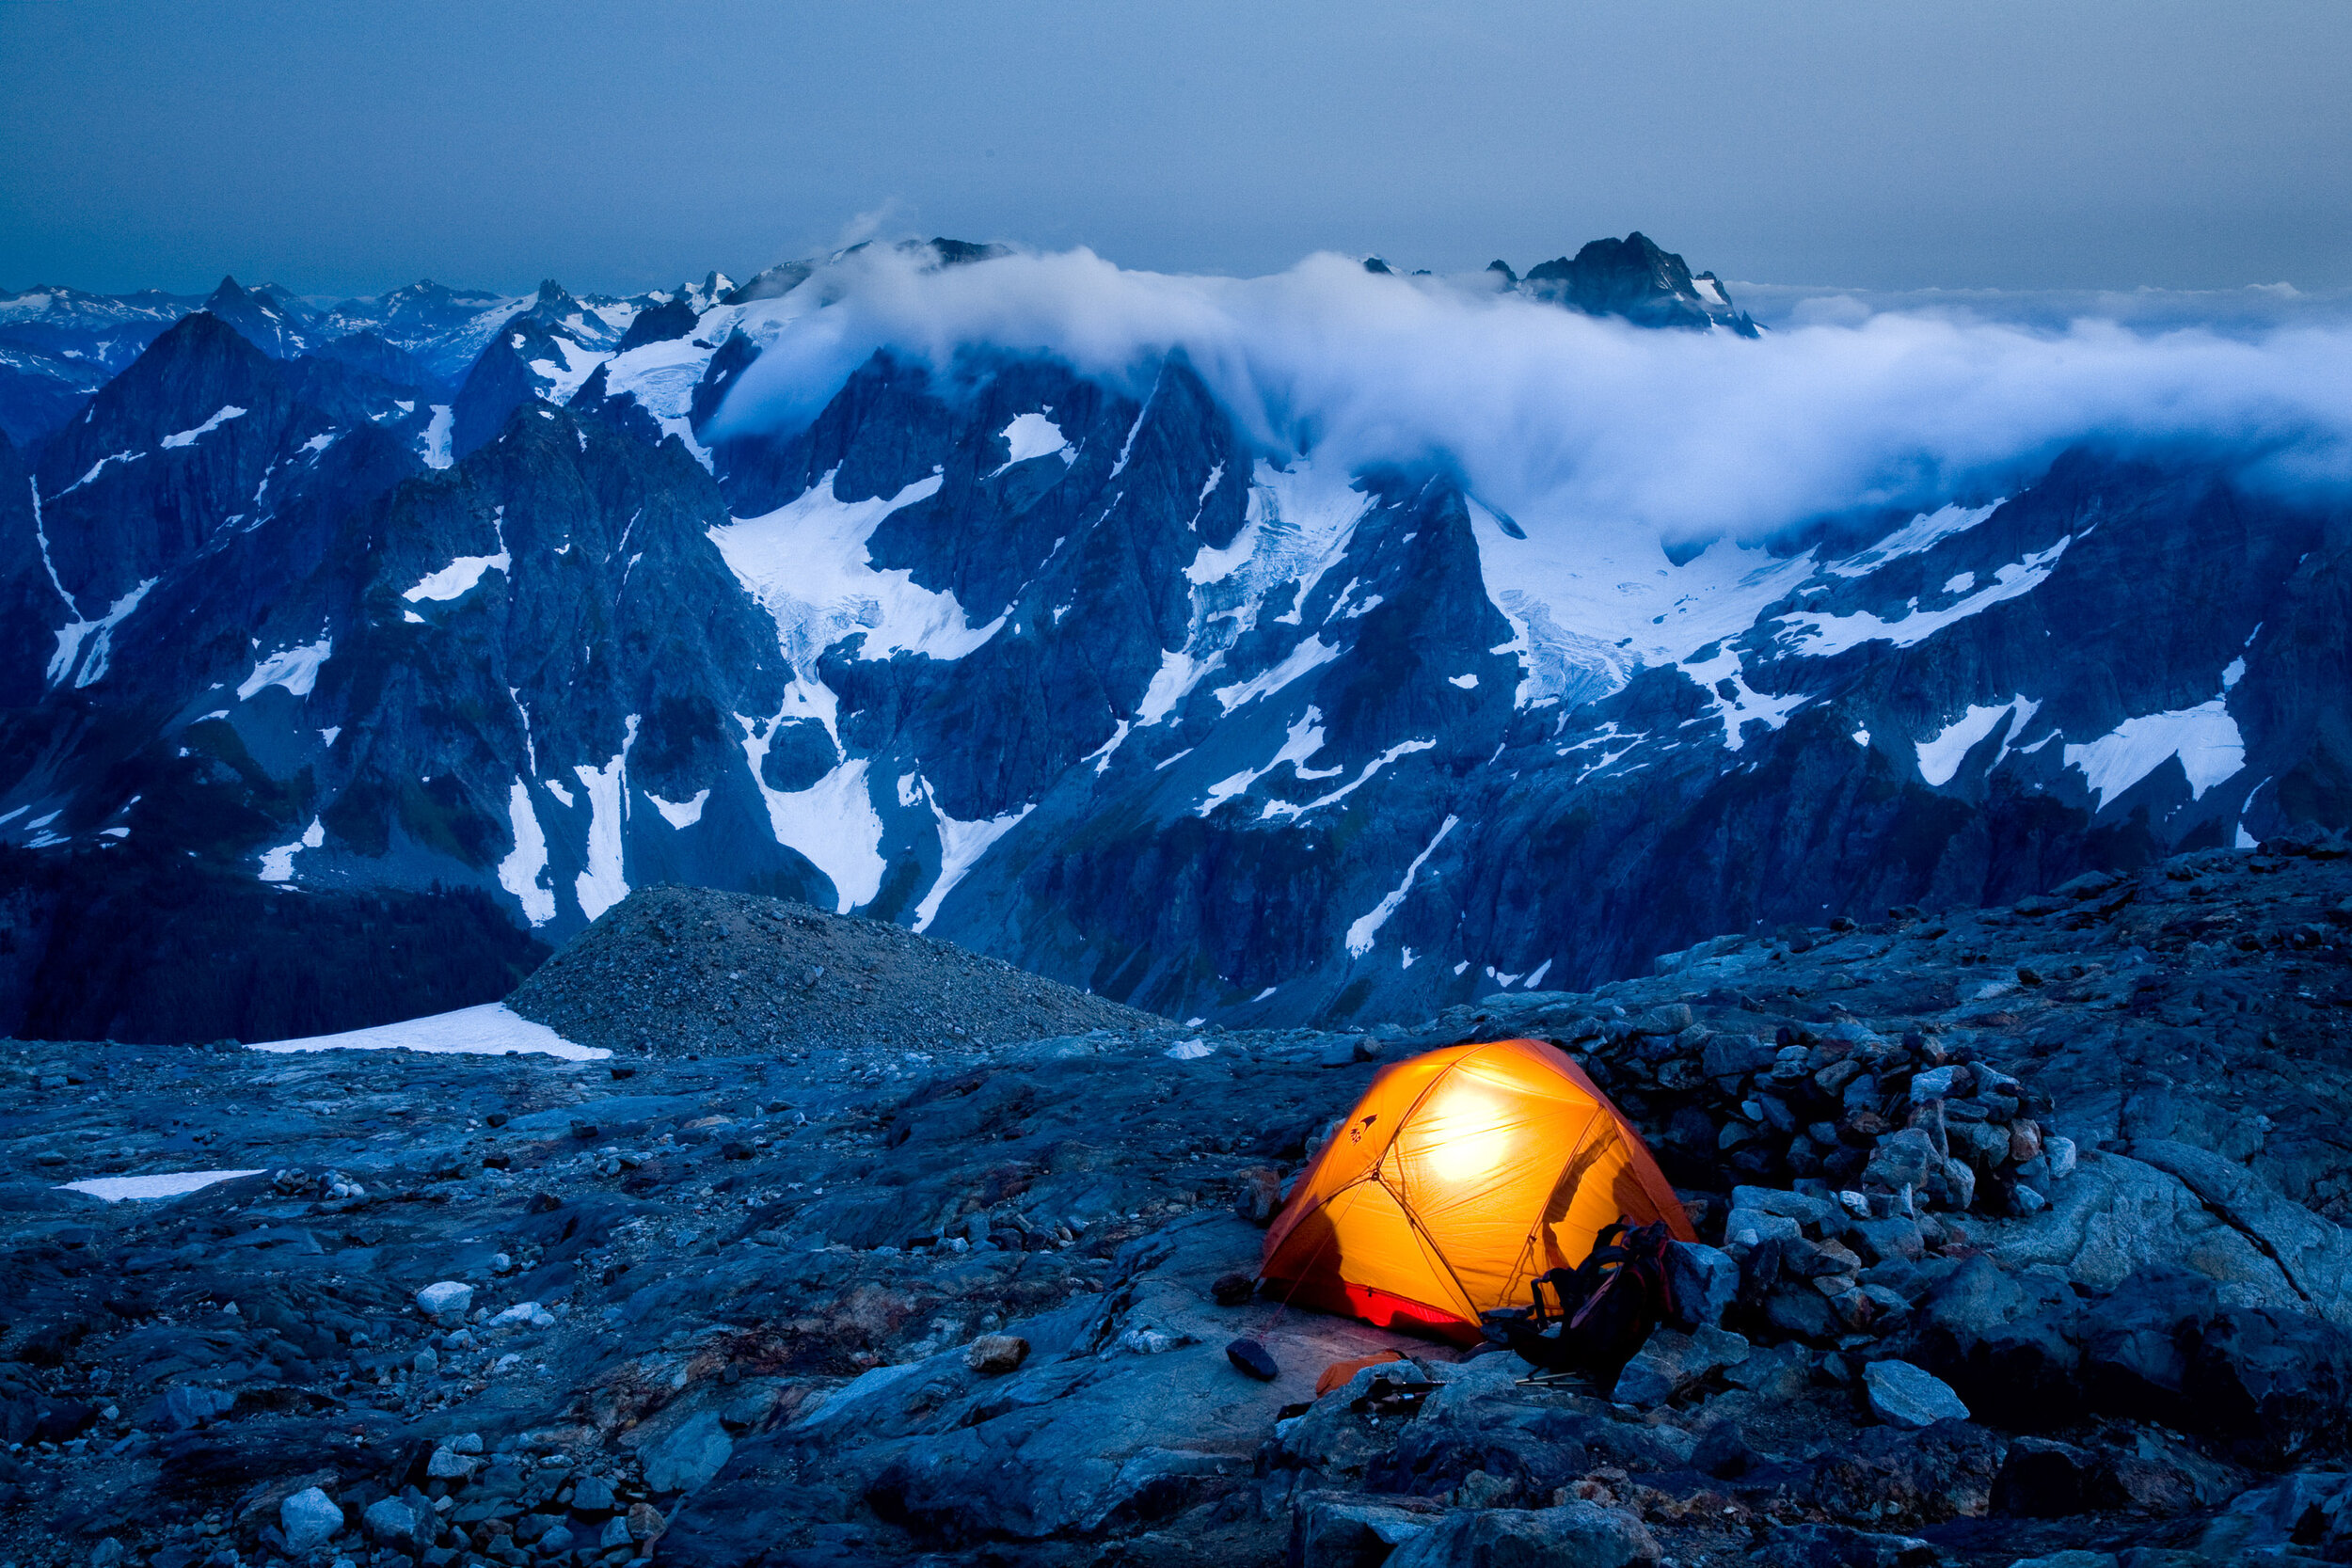  Adventure: Camping at below Sahale Peak at dusk, North Cascades National Park 